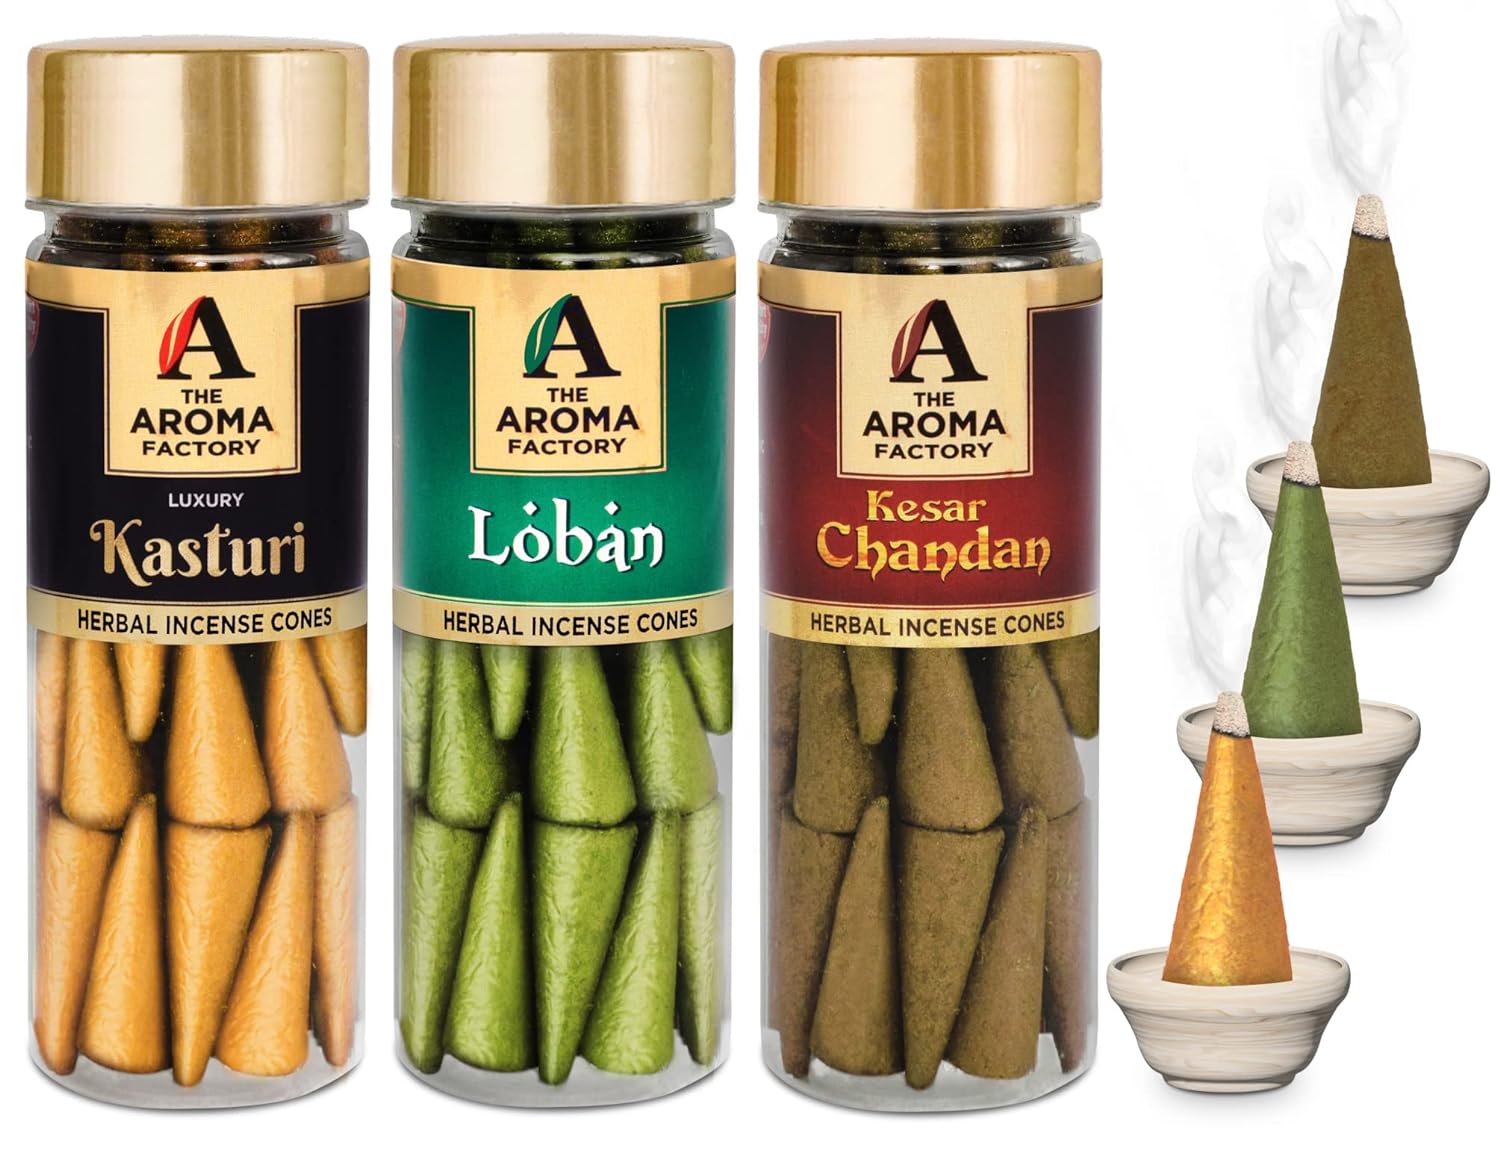 The Aroma Factory Incense Dhoop Cone for Pooja, Loban, Kasturi & Kesar Chandan (100% Herbal & 0% Charcoal) 3 Bottles x 30 Cones